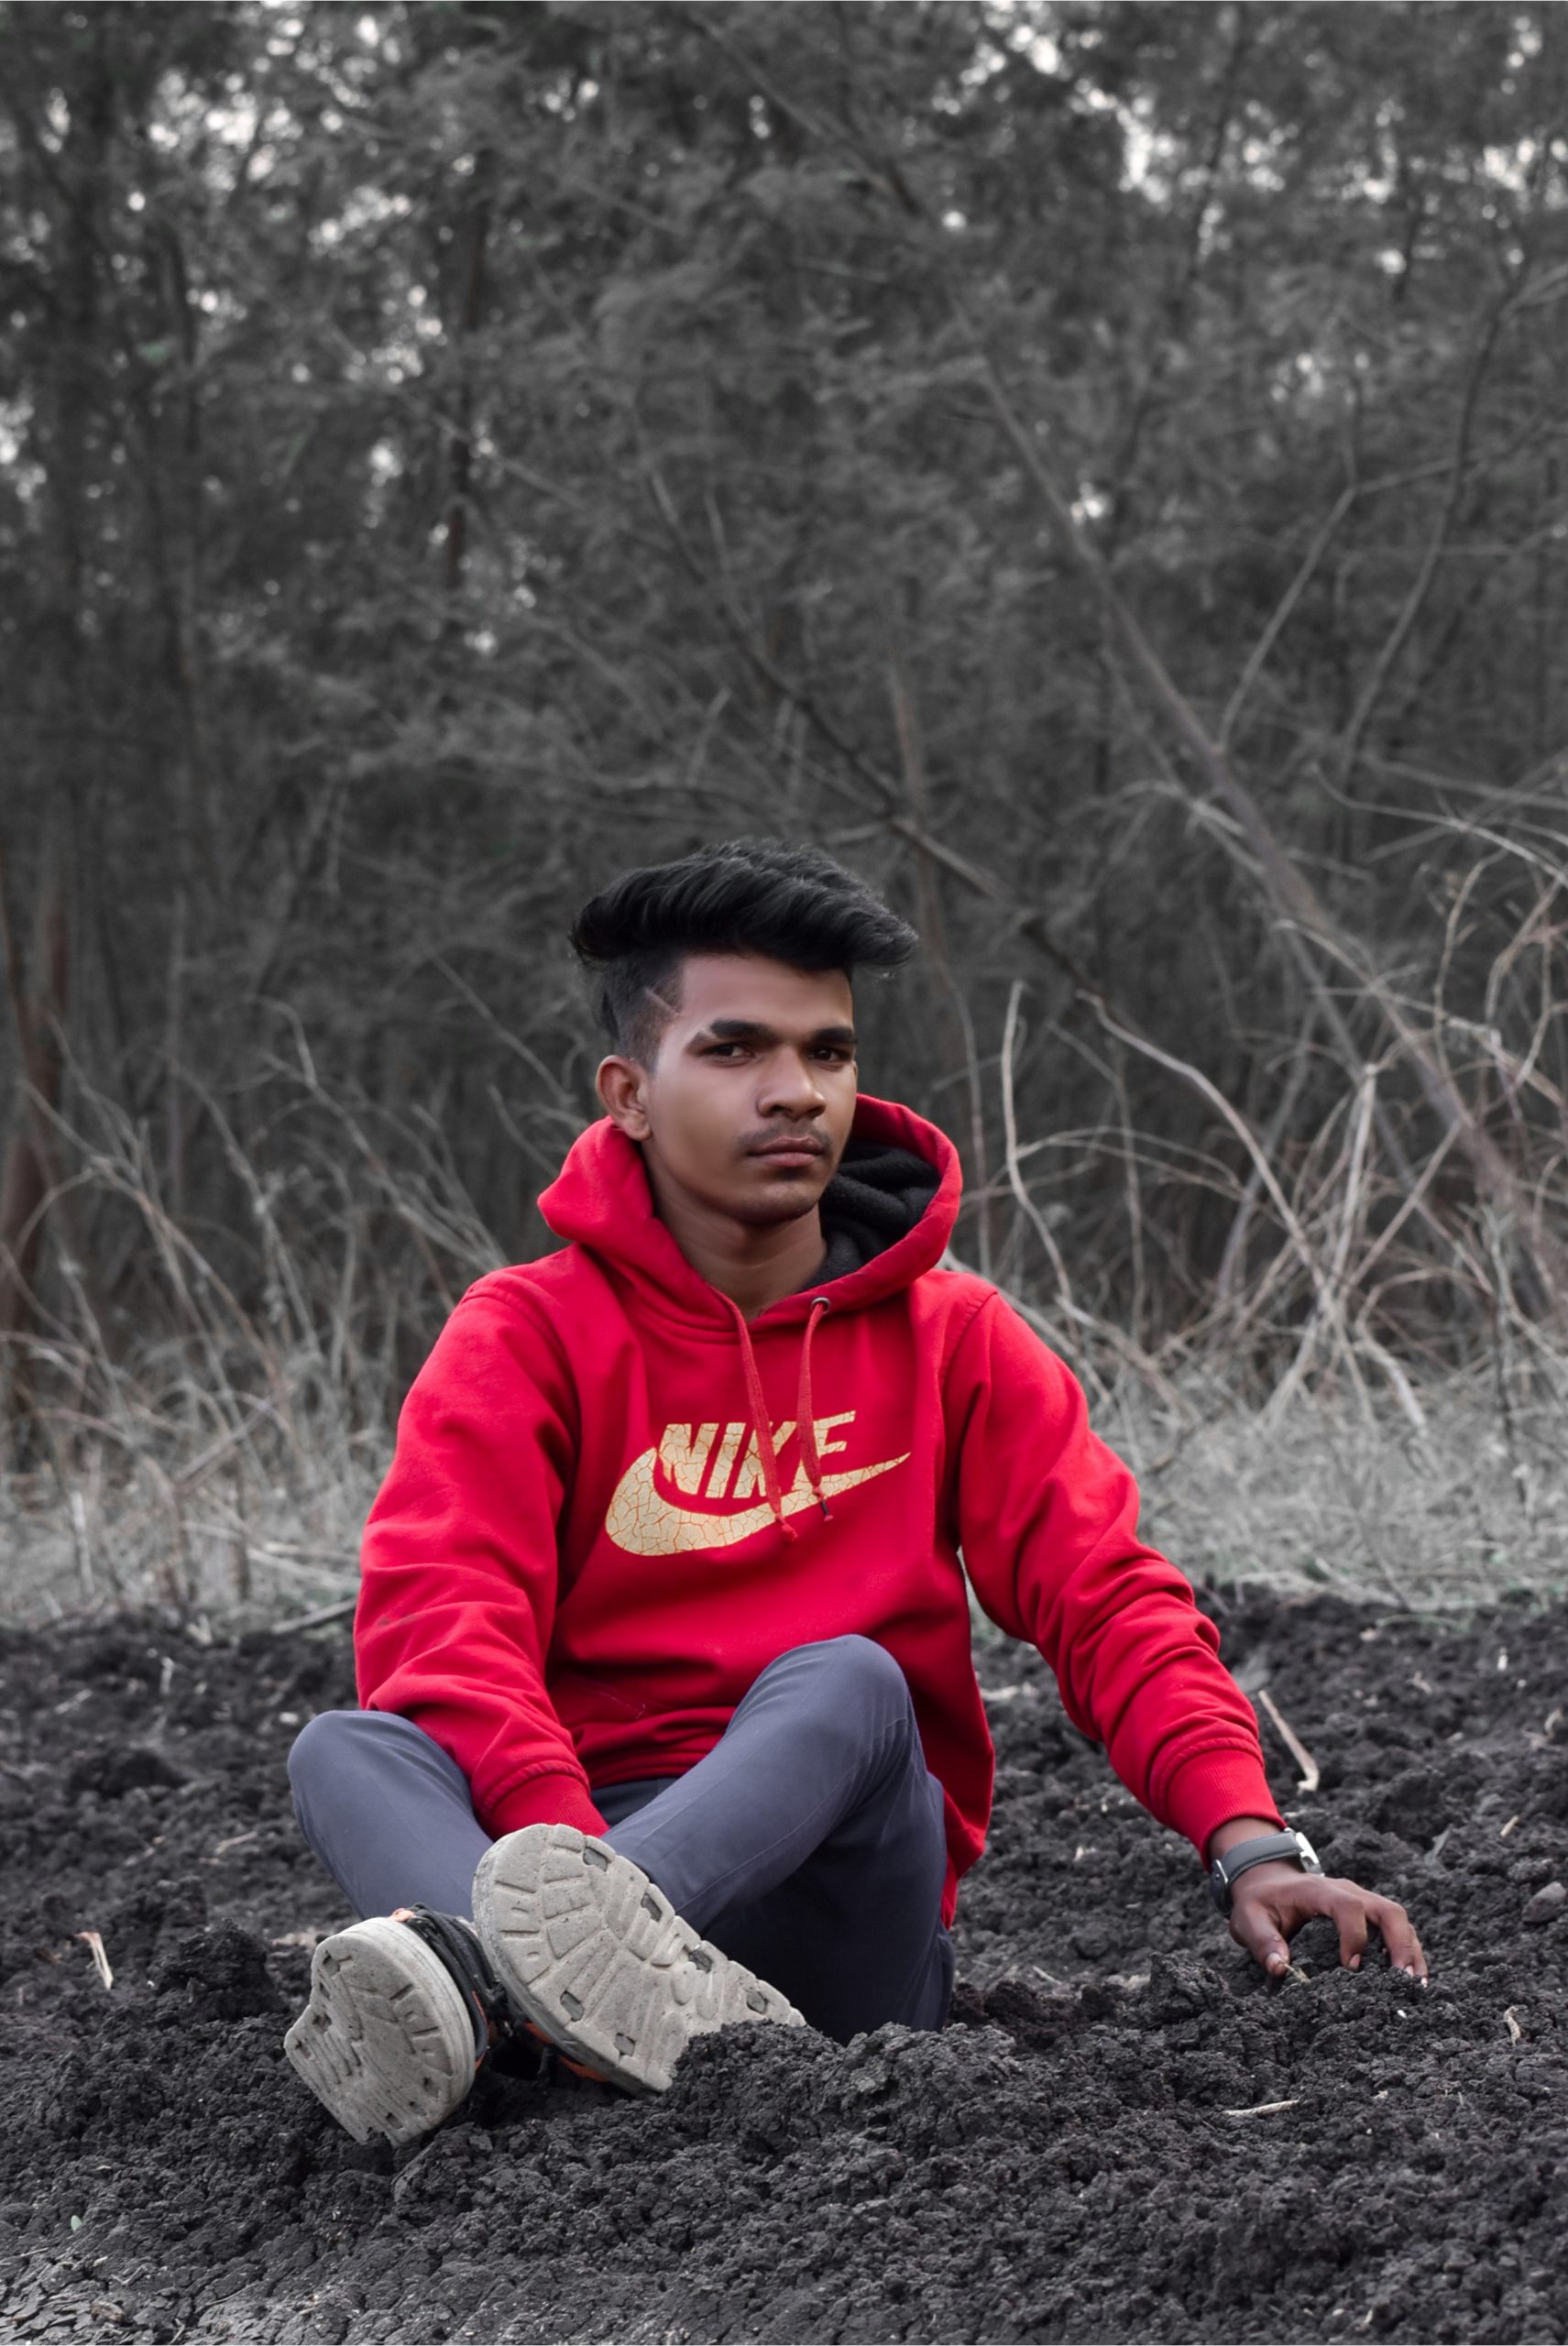 A boy sitting on soil